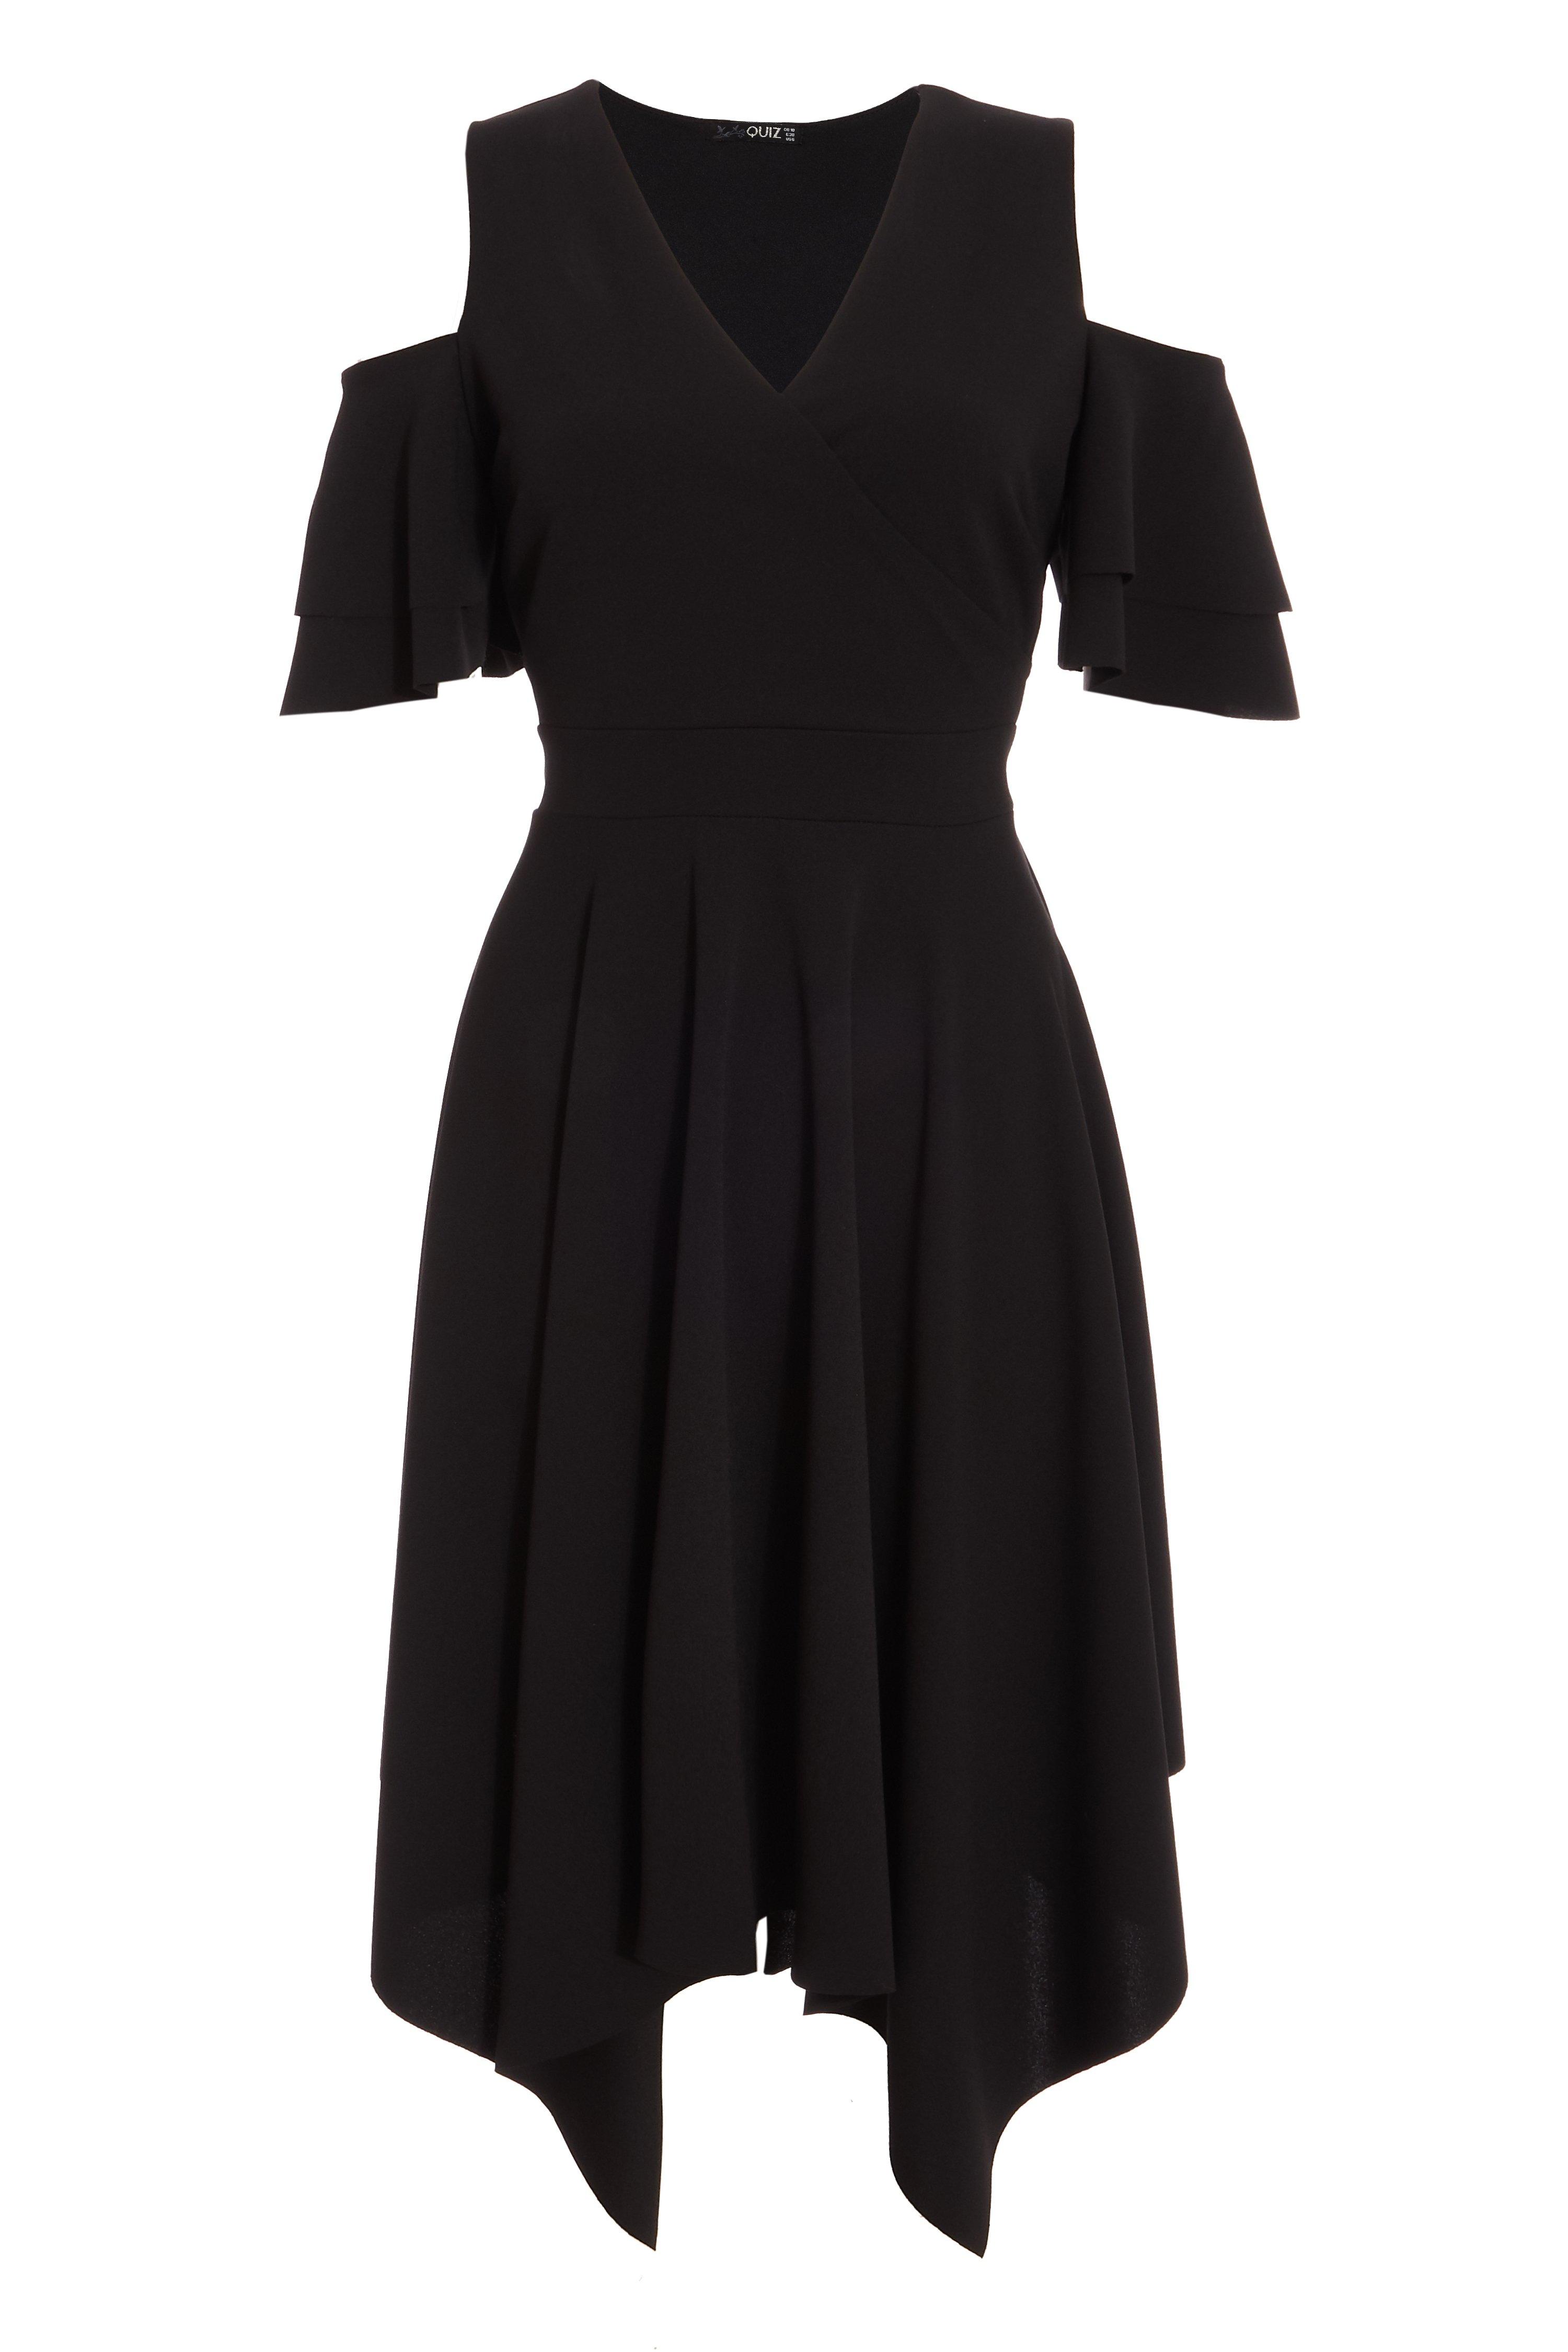 Black Cold Shoulder Midi Dress - Quiz Clothing